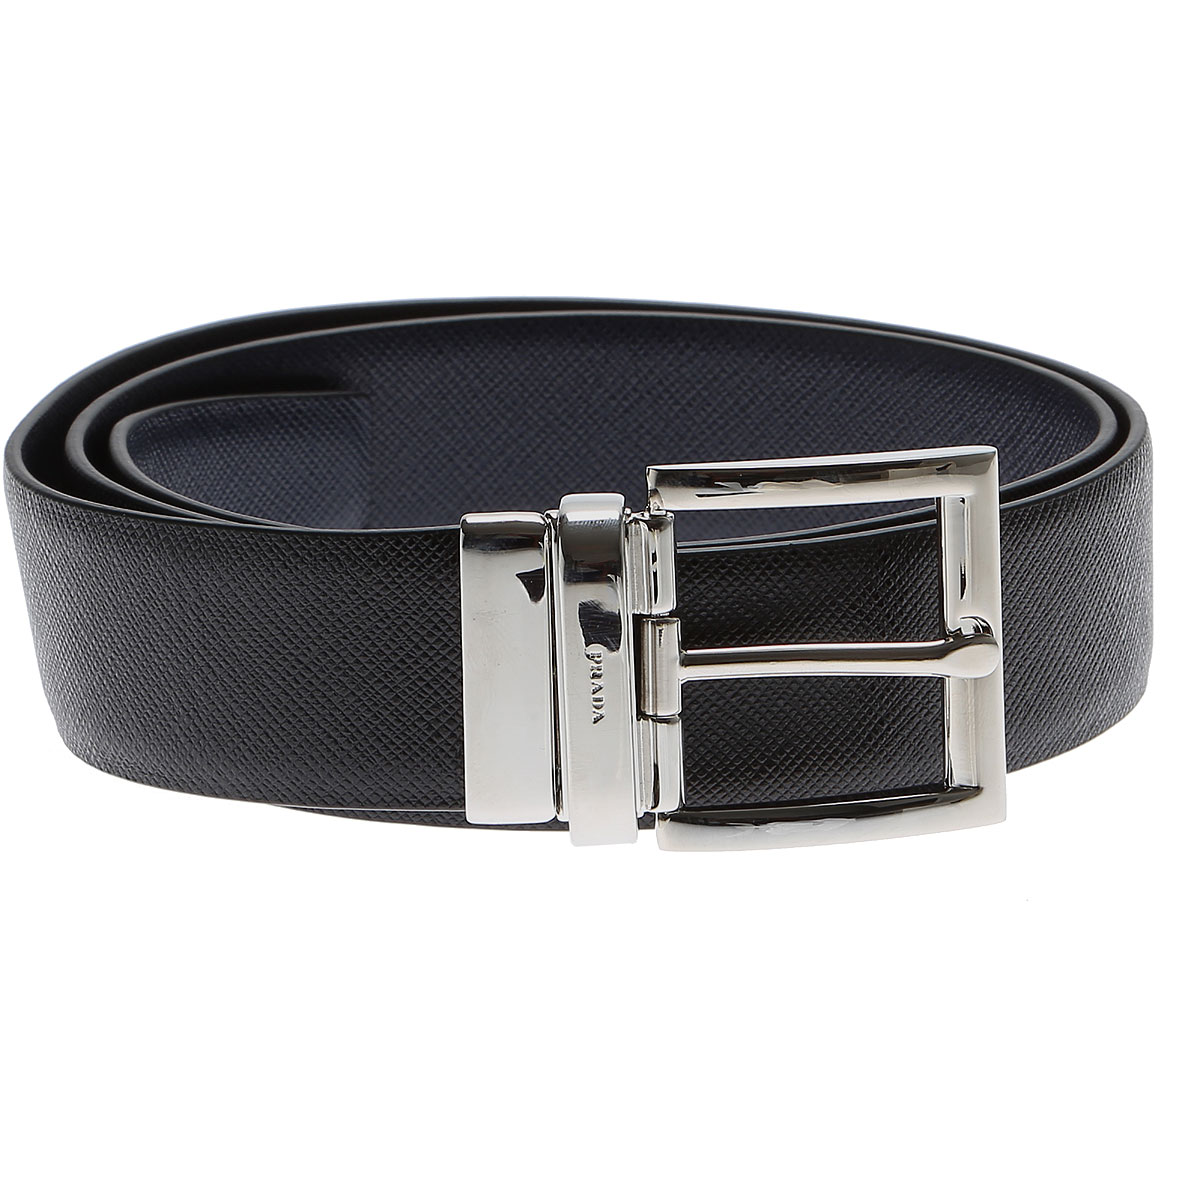 Mens Belts Prada, Style code: 2cc004-053-g52